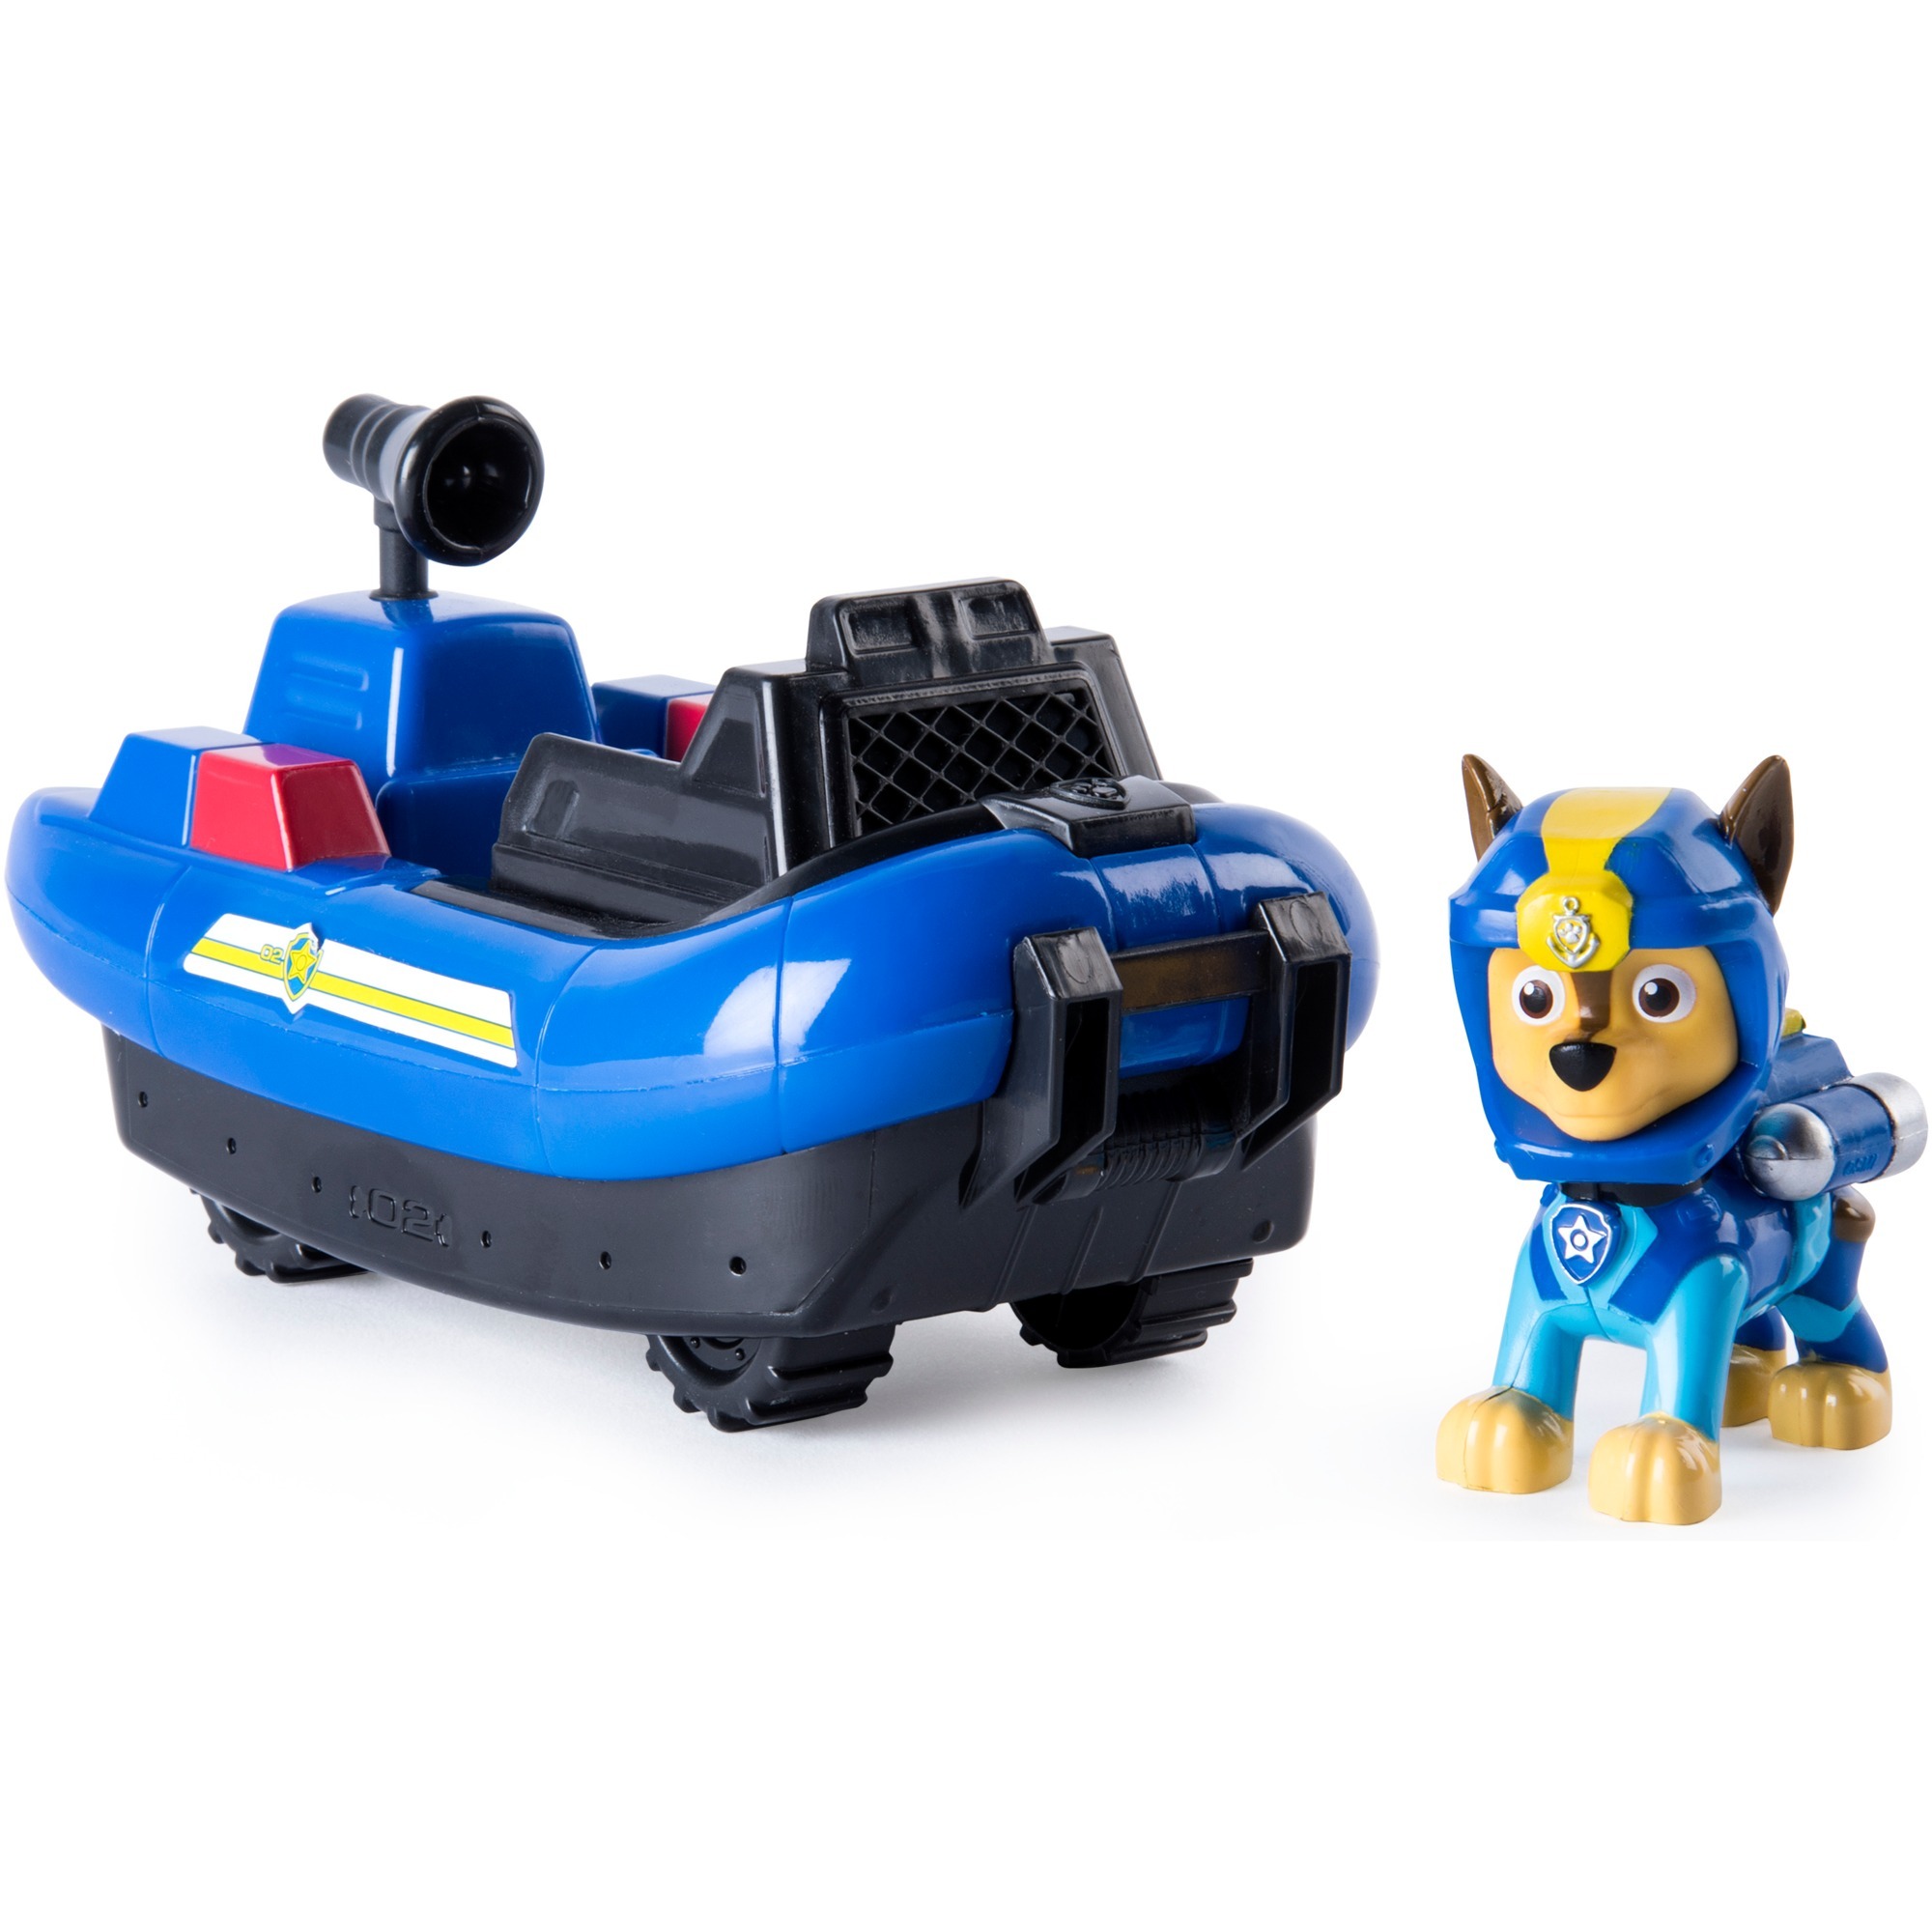 Sea Patrol Themed Vehicle Chase, Toy vehicle